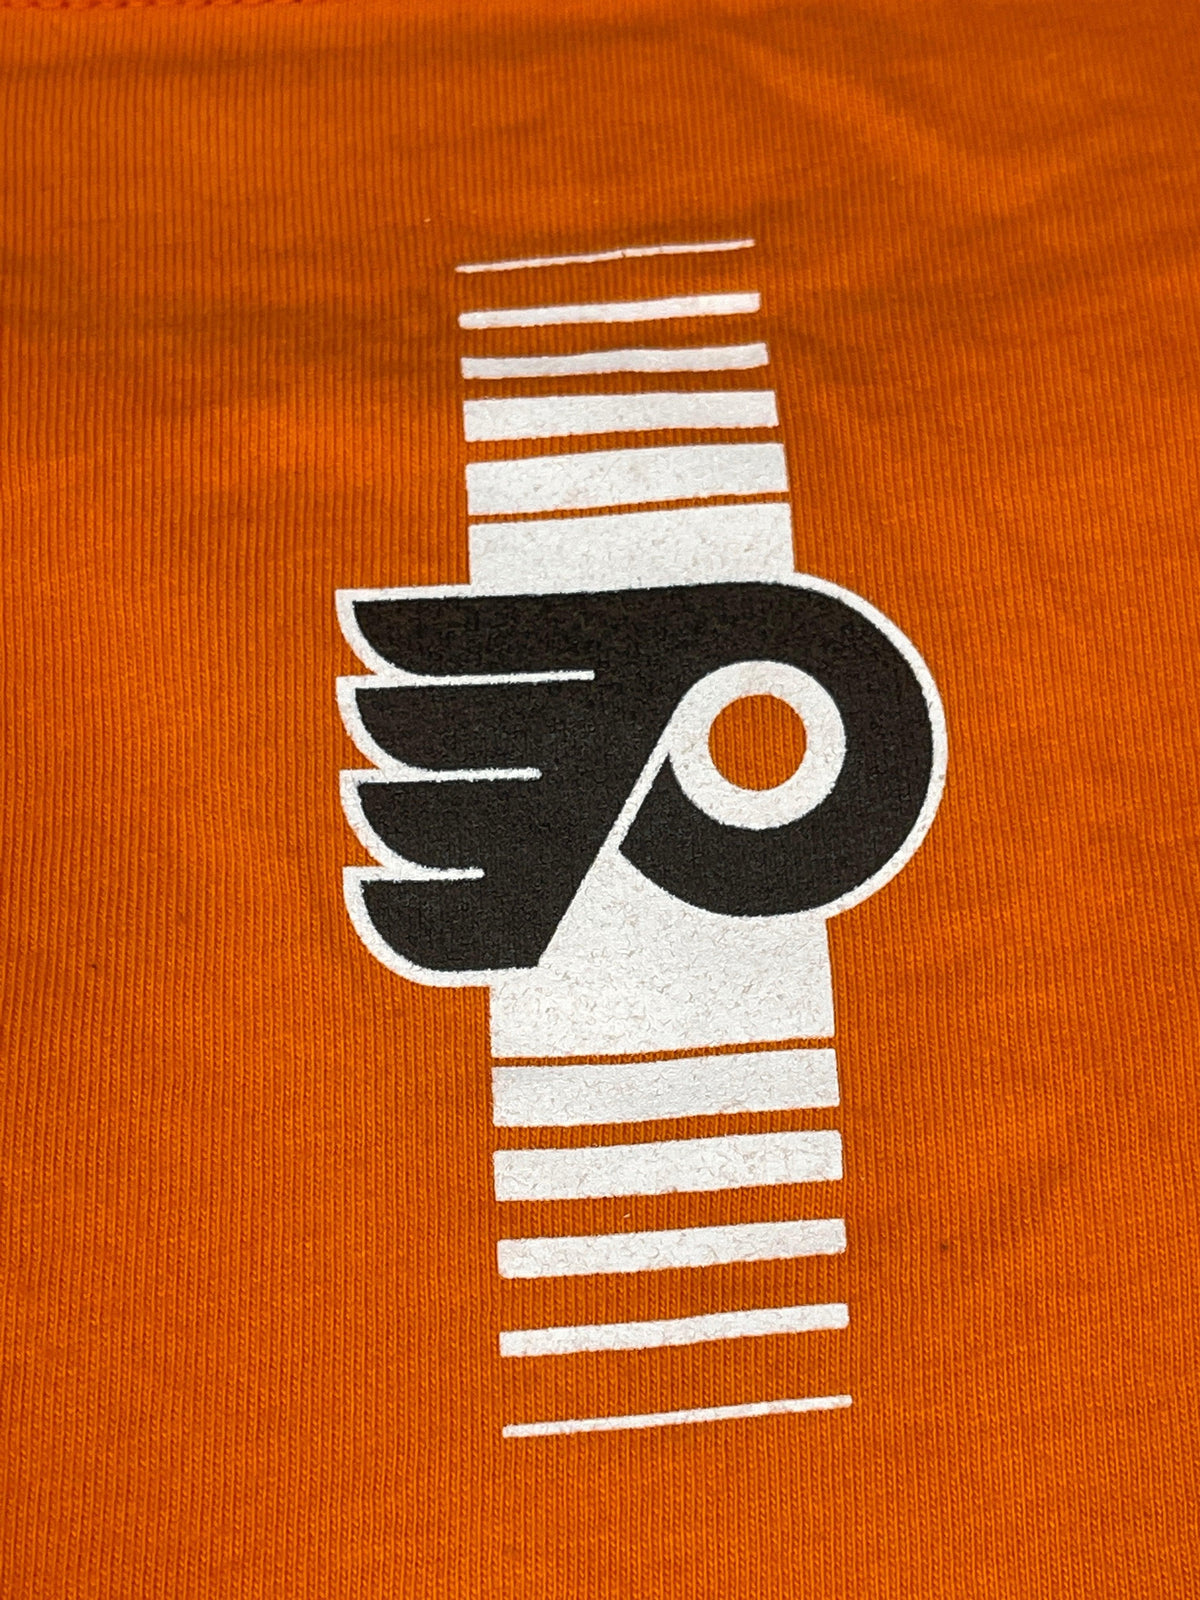 NHL Philadelphia Flyers Reebok Orange T-Shirt Women's Medium